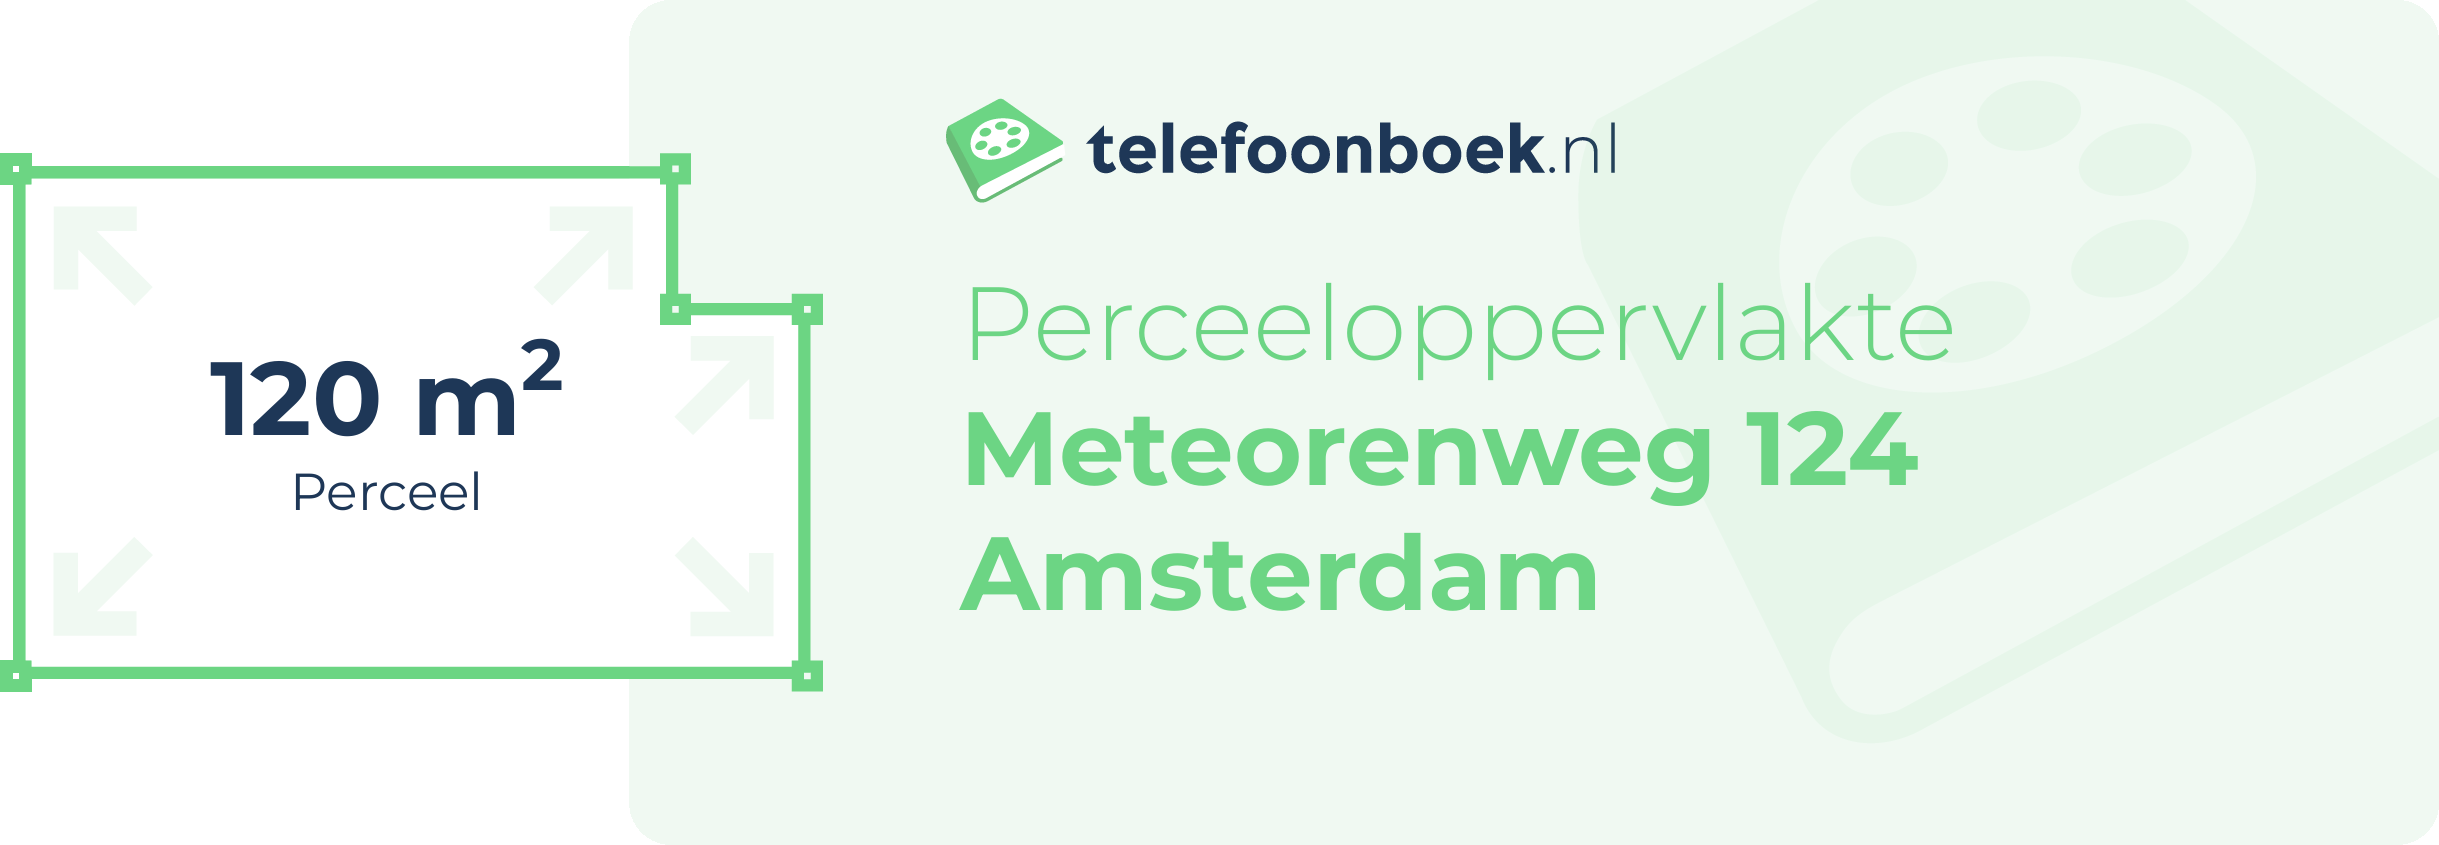 Perceeloppervlakte Meteorenweg 124 Amsterdam